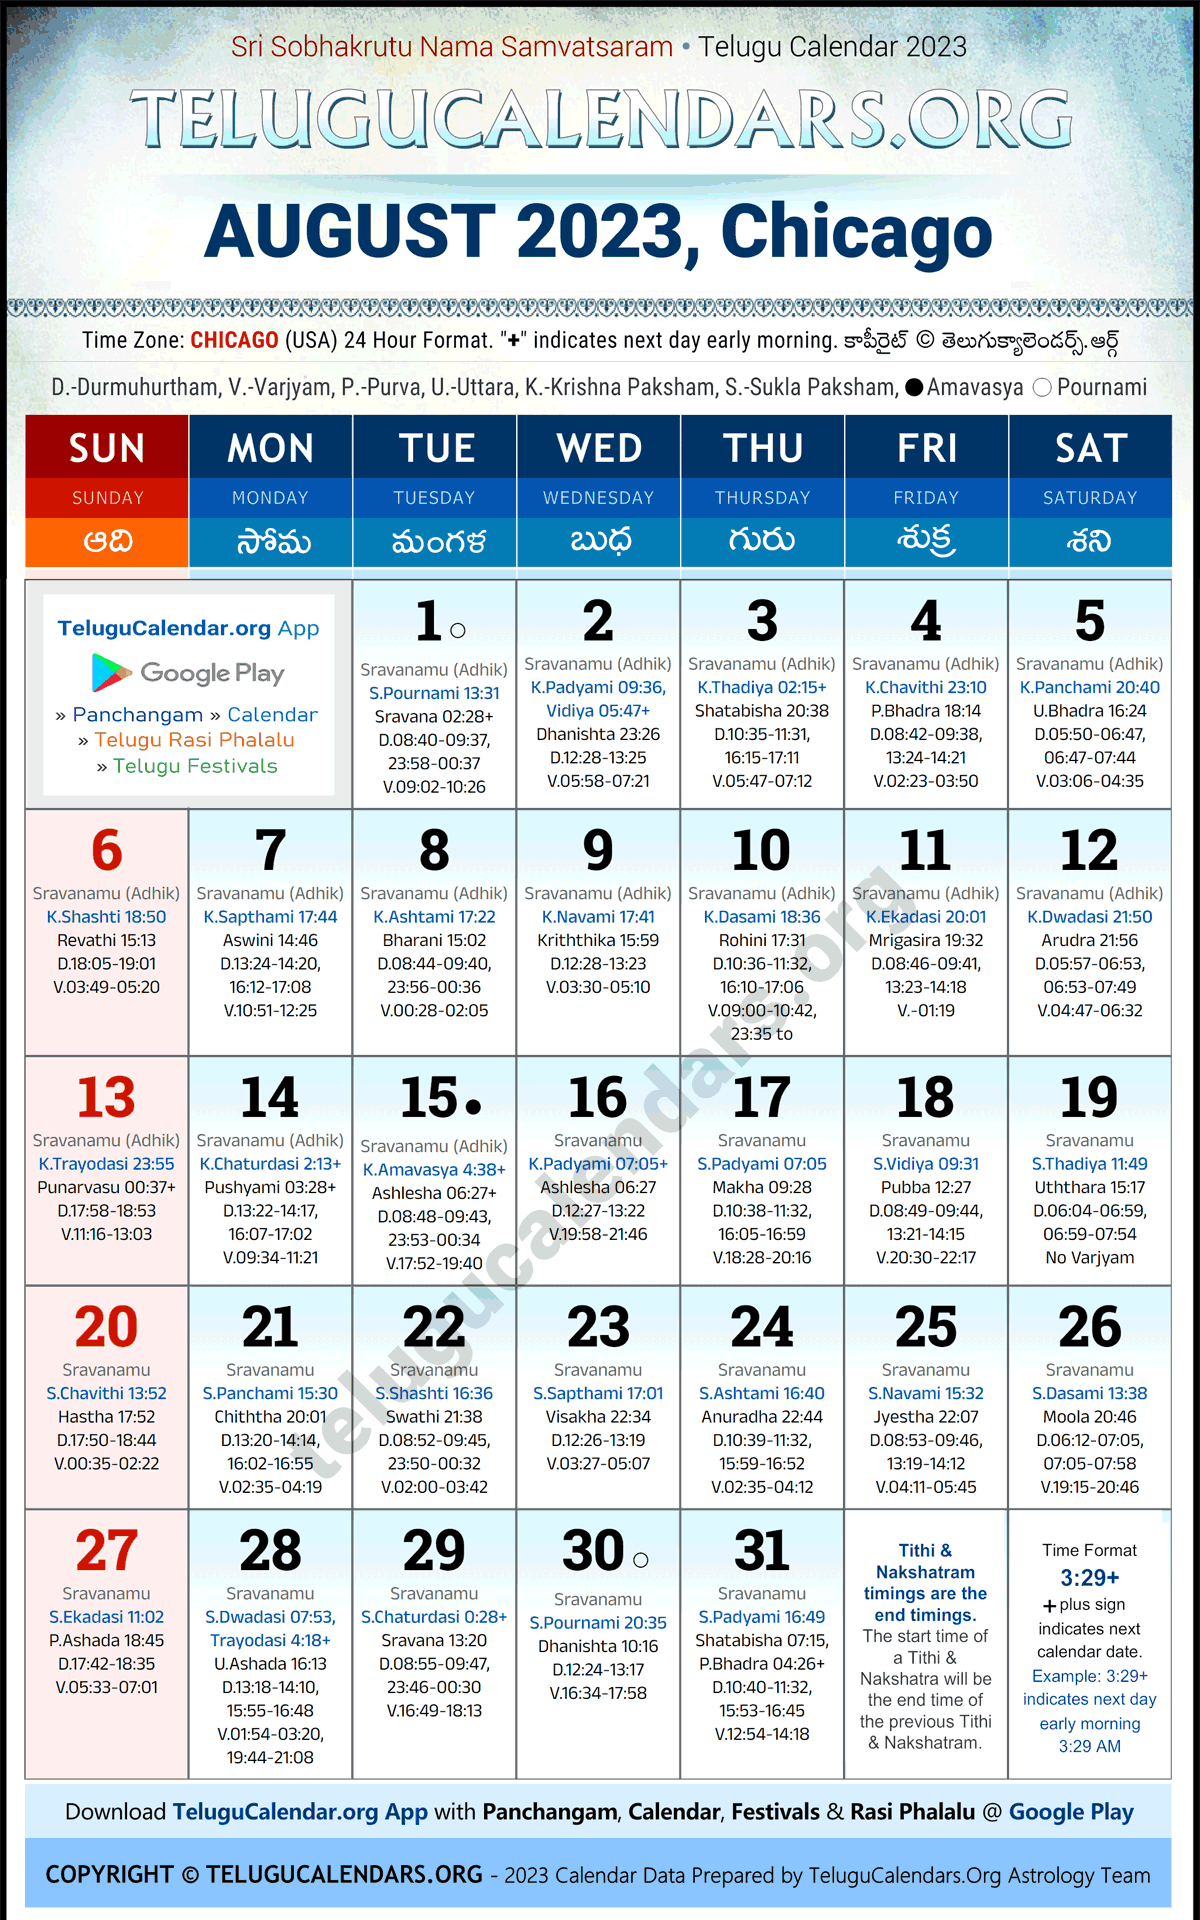 Telugu Calendar 2023 August Festivals for Chicago